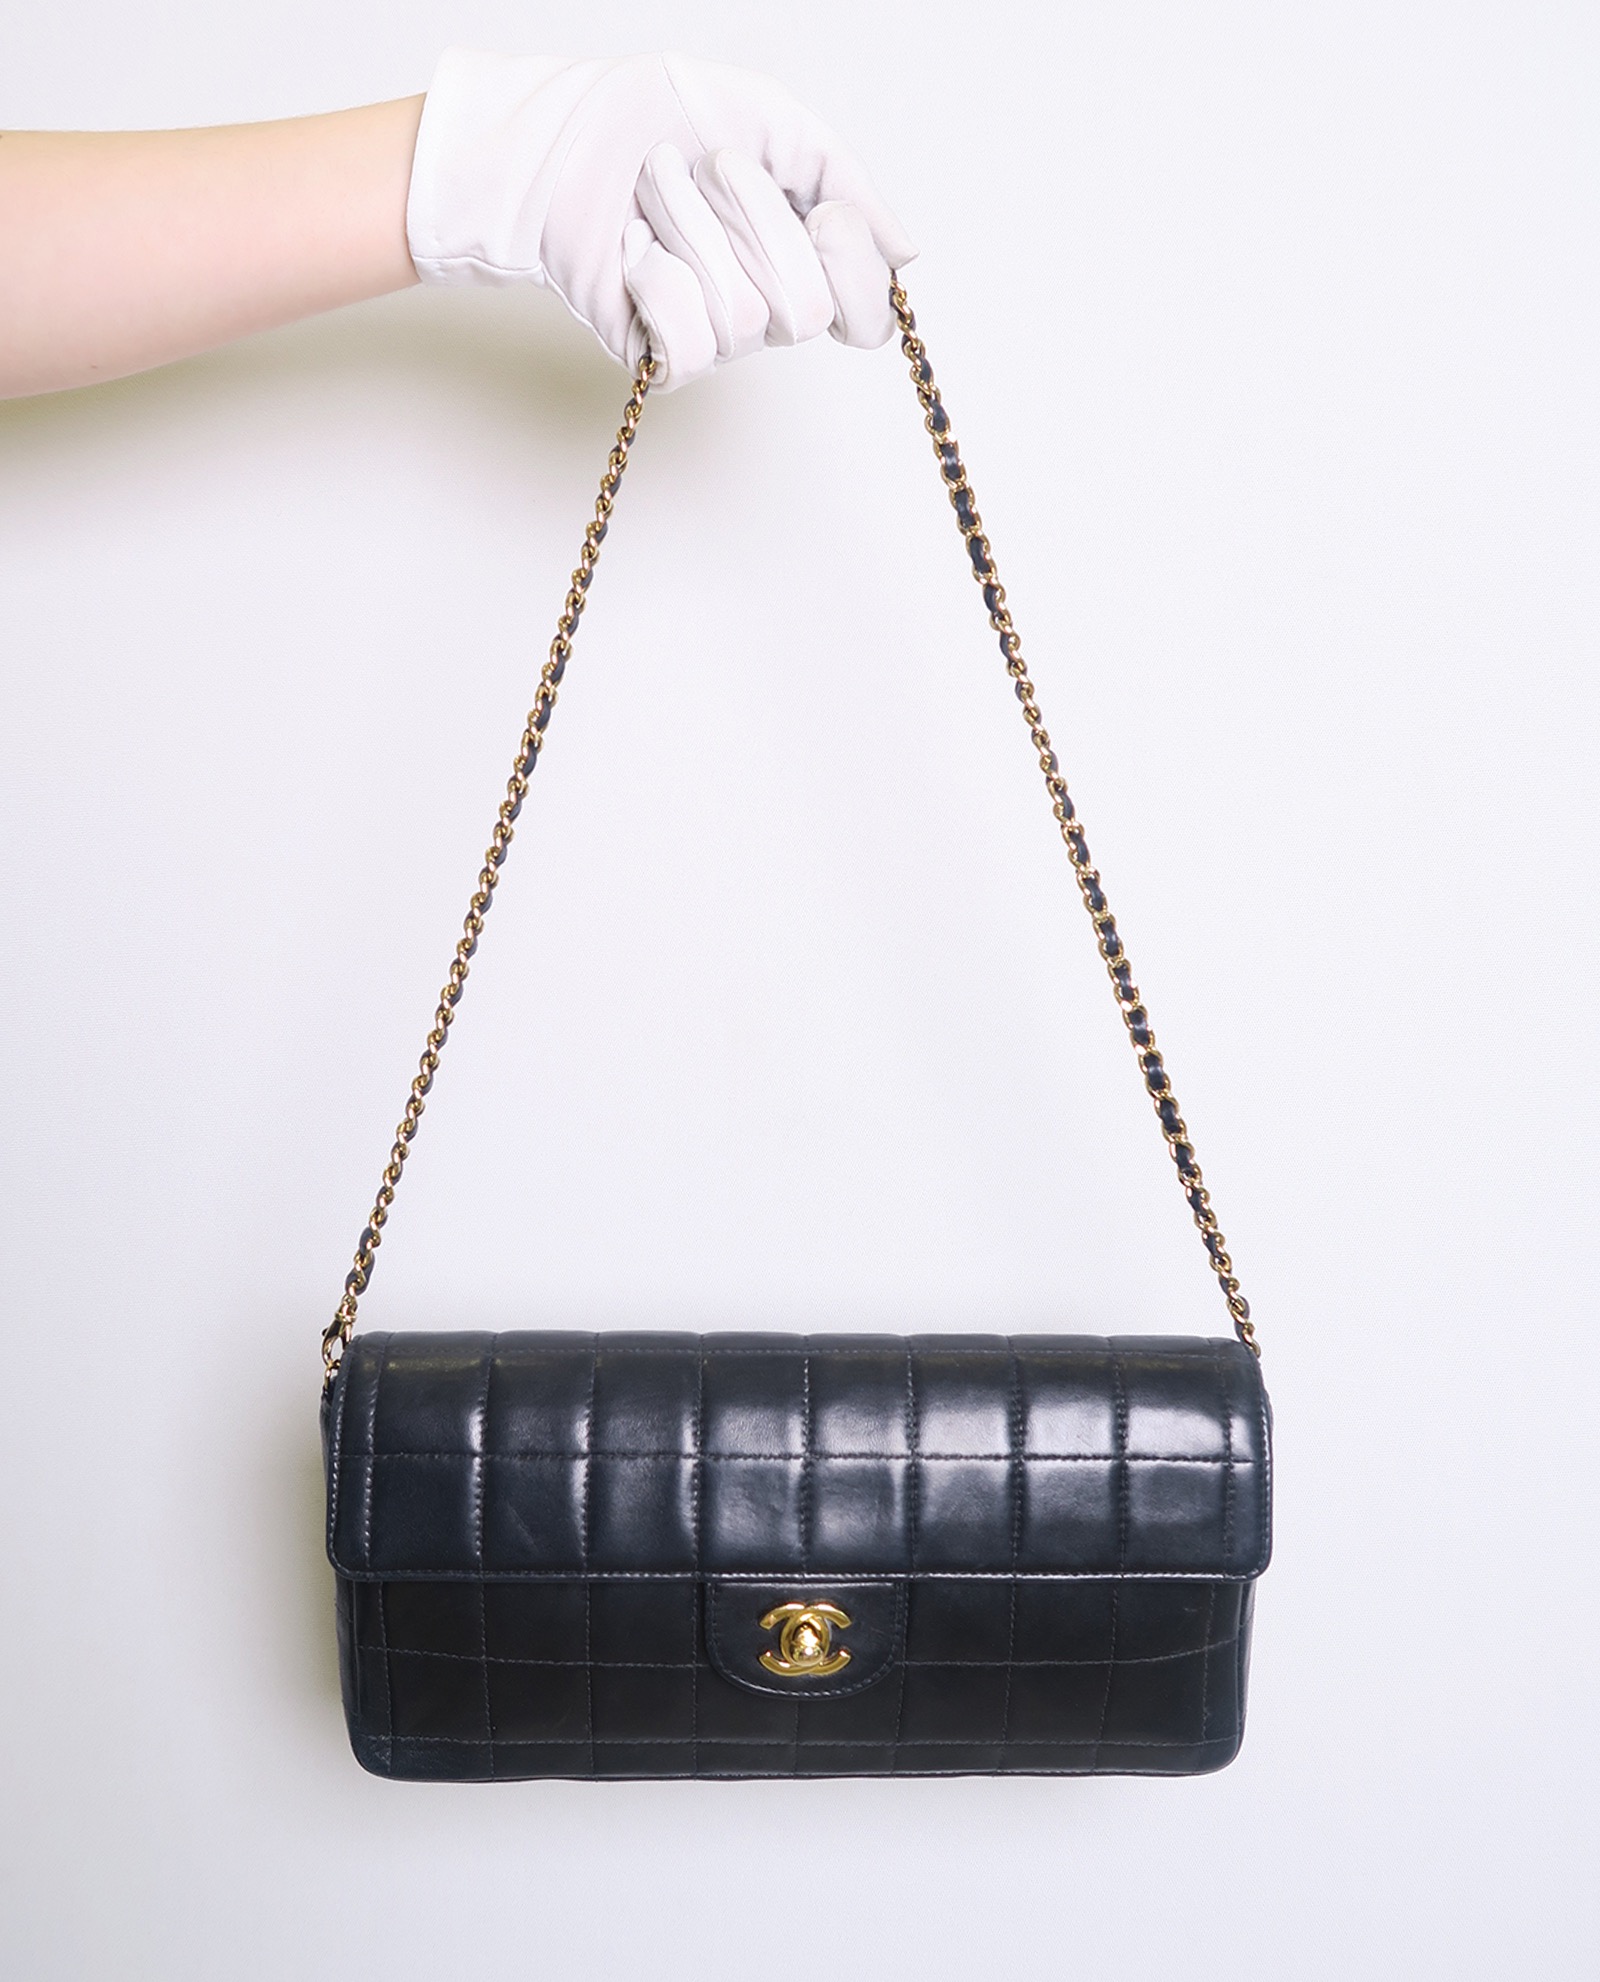 Chanel Chocolate Bar Bag/Clutch - Designer WishBags